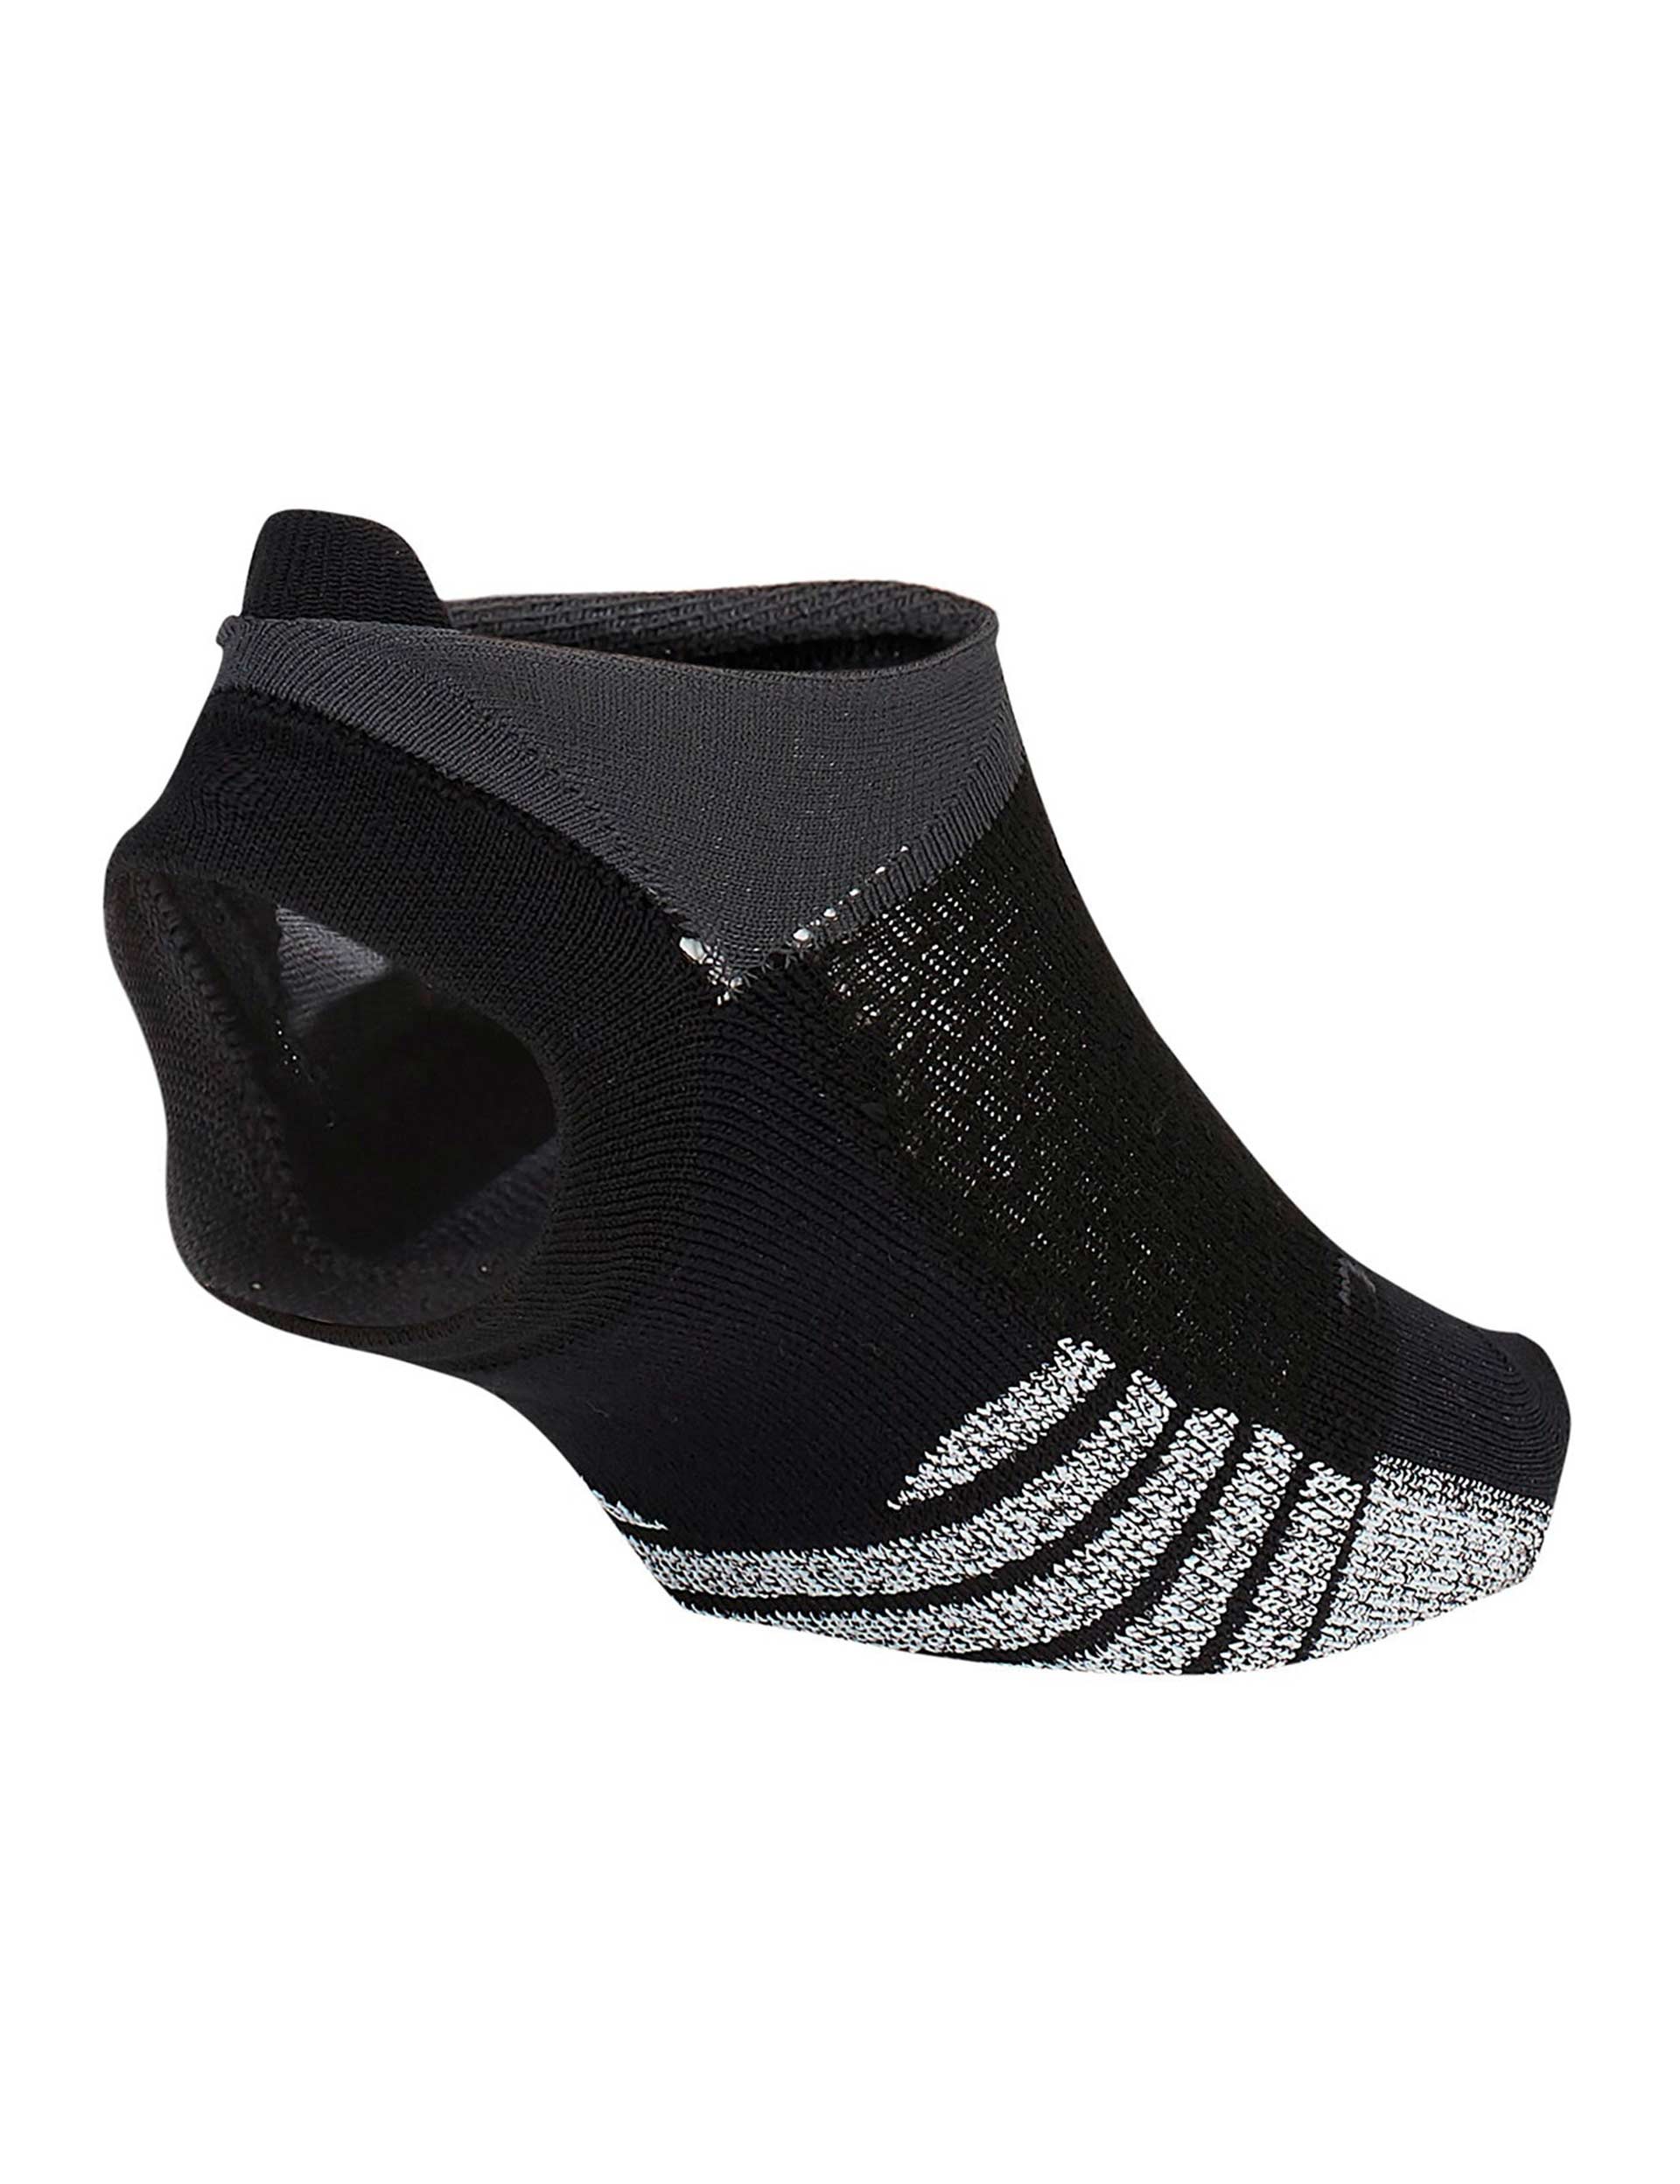 Nike NikeGrip Studio Footie Socks - Black/Anthraciteimages2- The Sports Edit